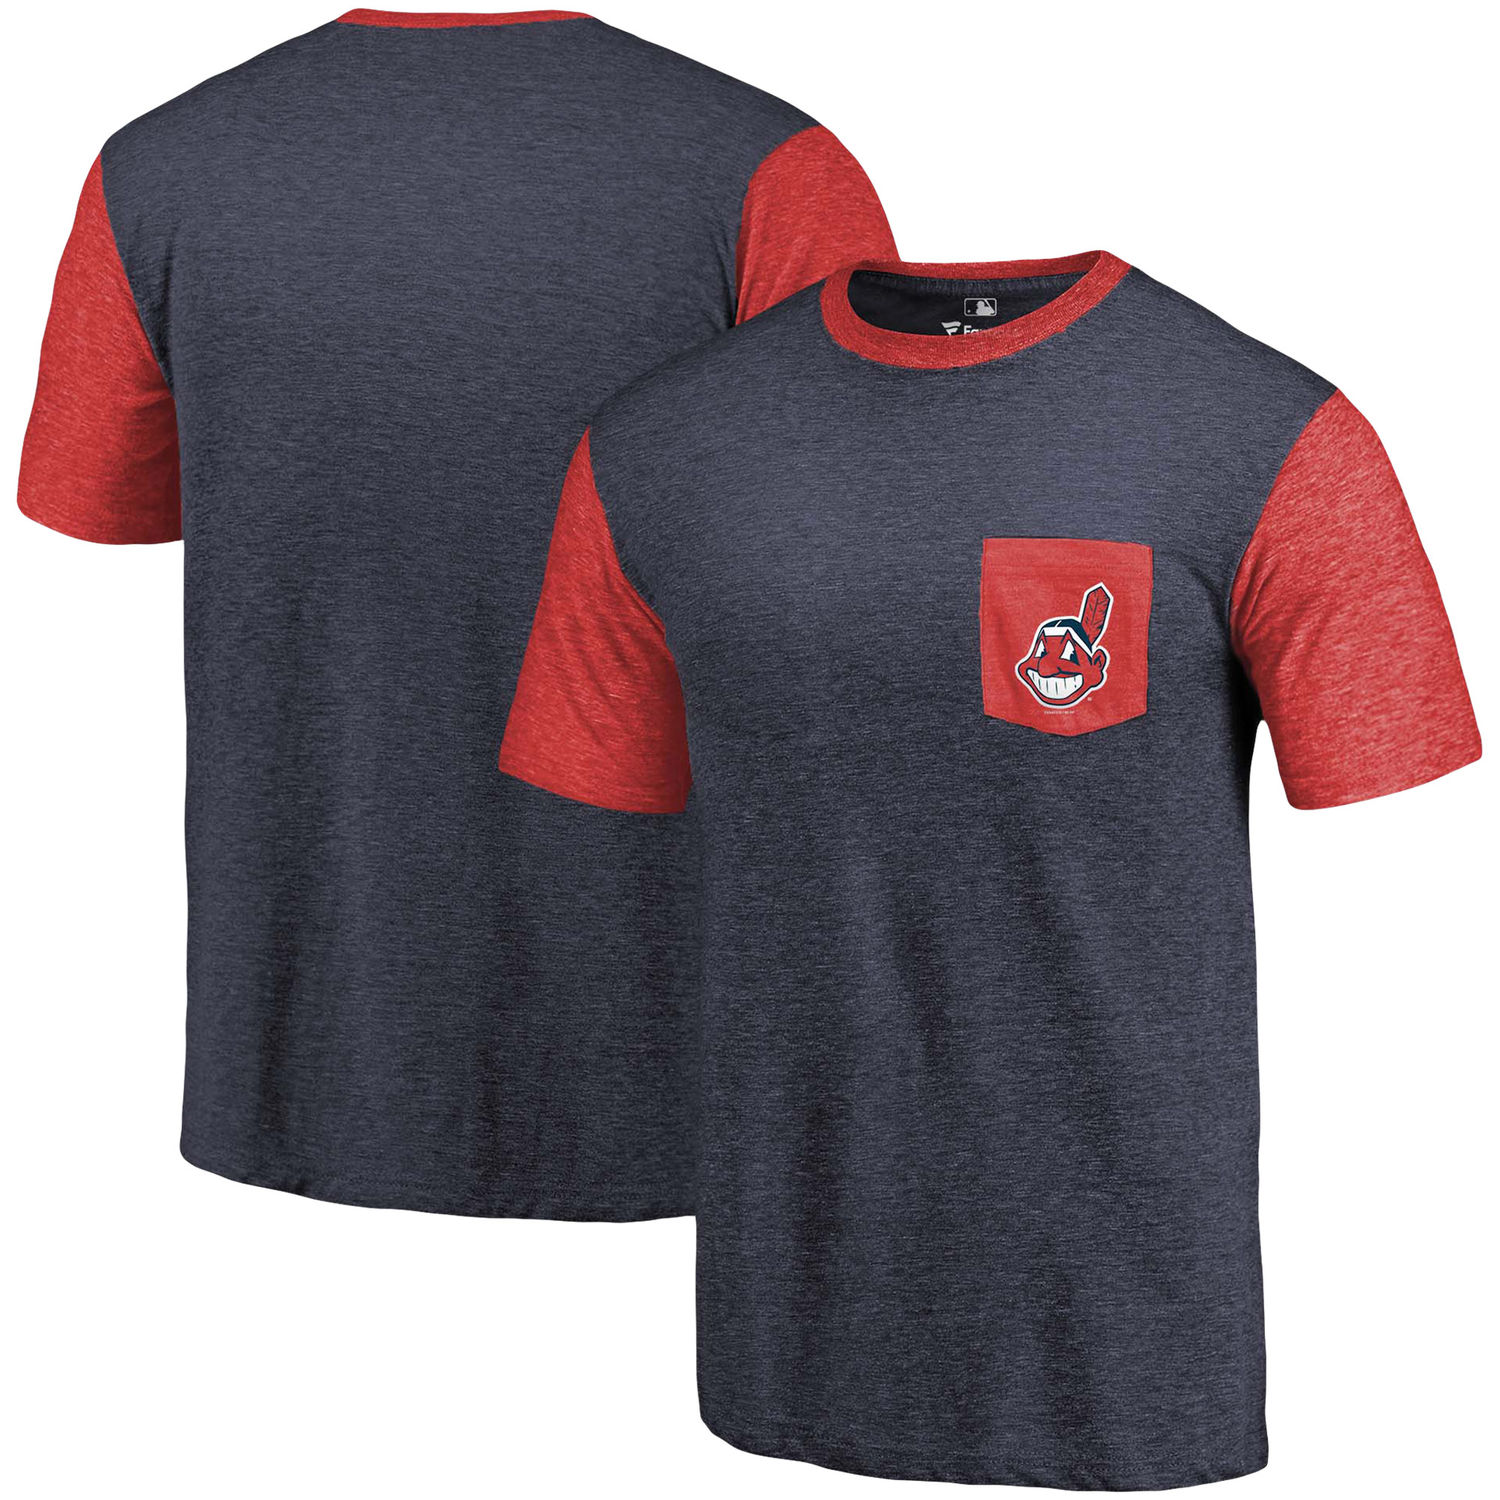 Men's Cleveland Indians Fanatics Branded Navy/Red Refresh Pocket T-Shirt